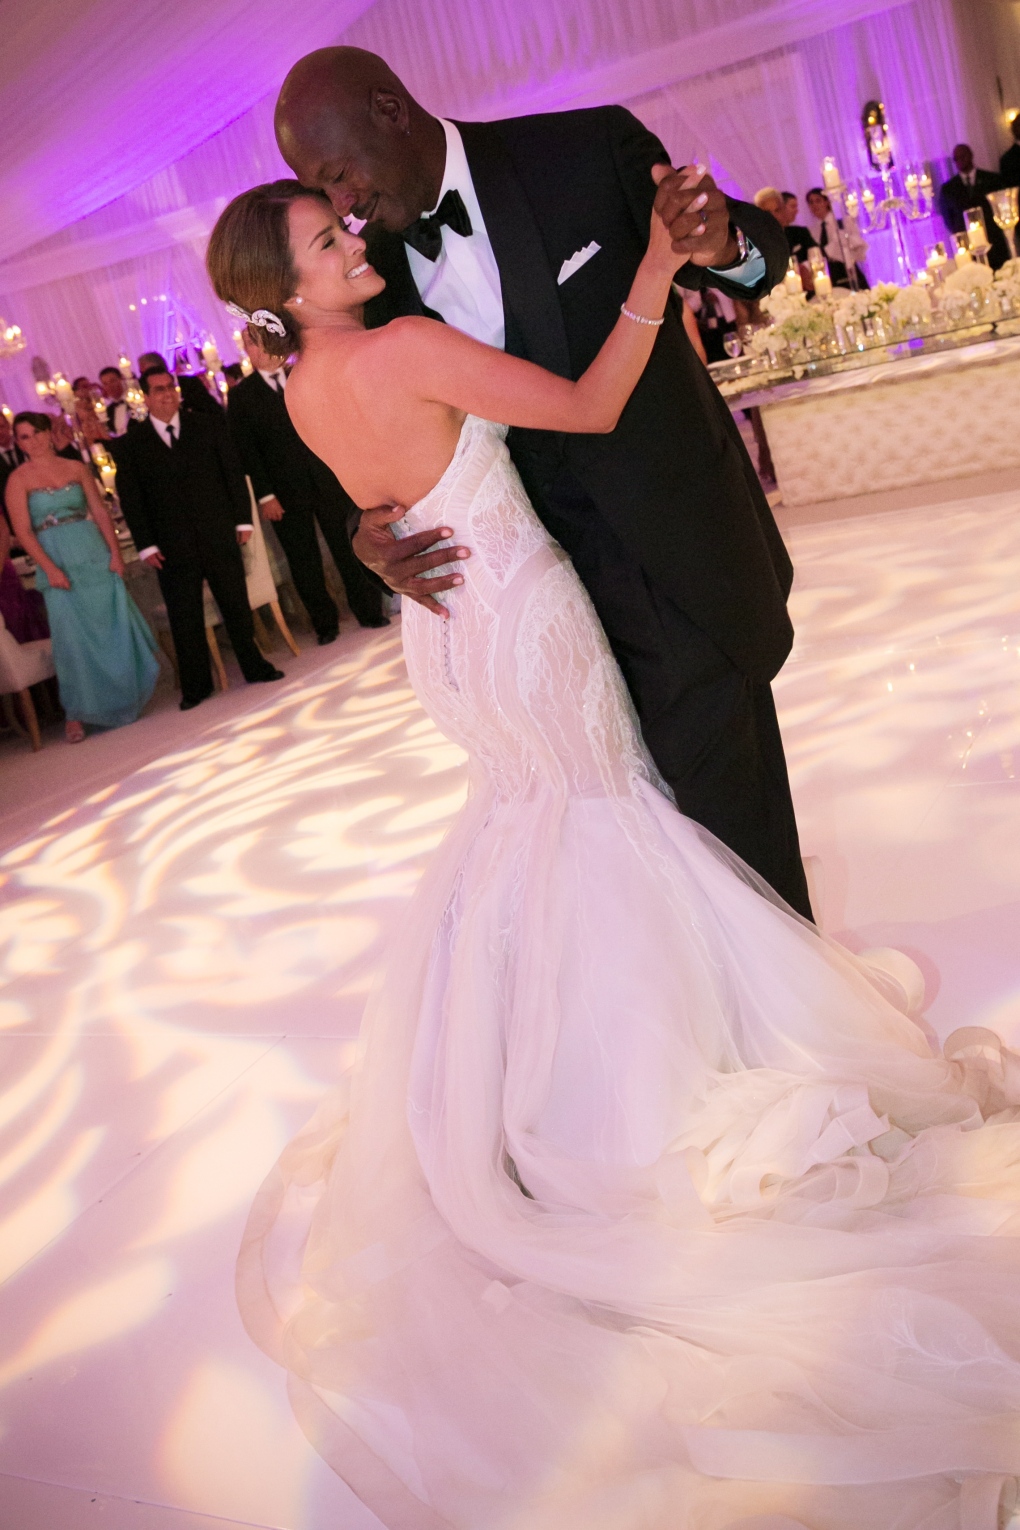 Michael Jordan and Yvette Prieto on April 27, 2013